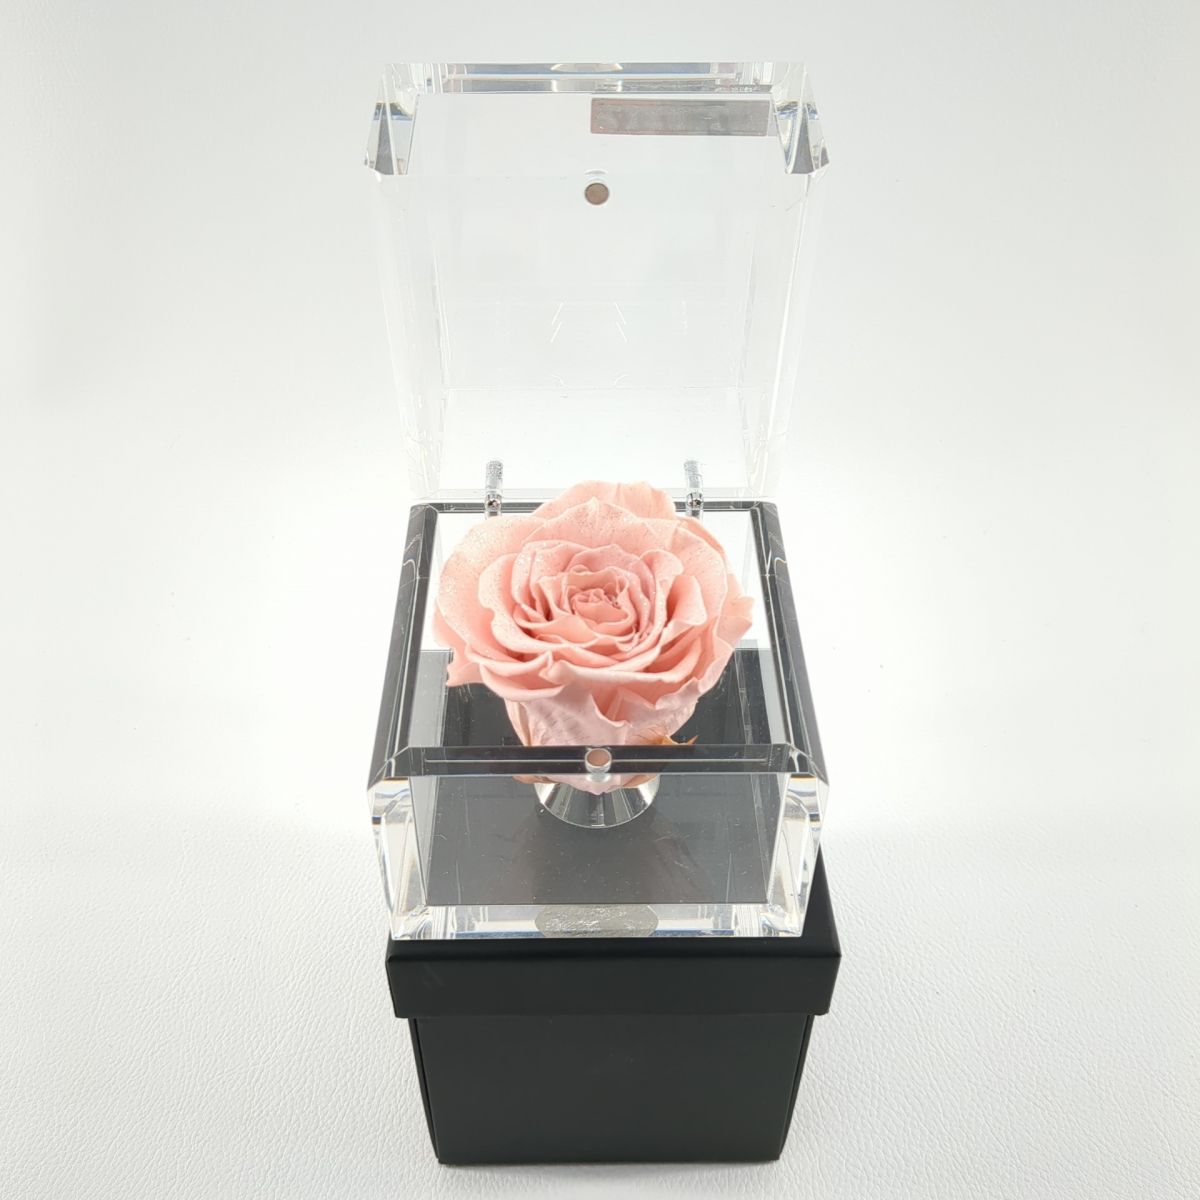 ROSE GALLERYmyuze diamond rose box (M) pink preserved rose interior *3109/. bamboo shop 